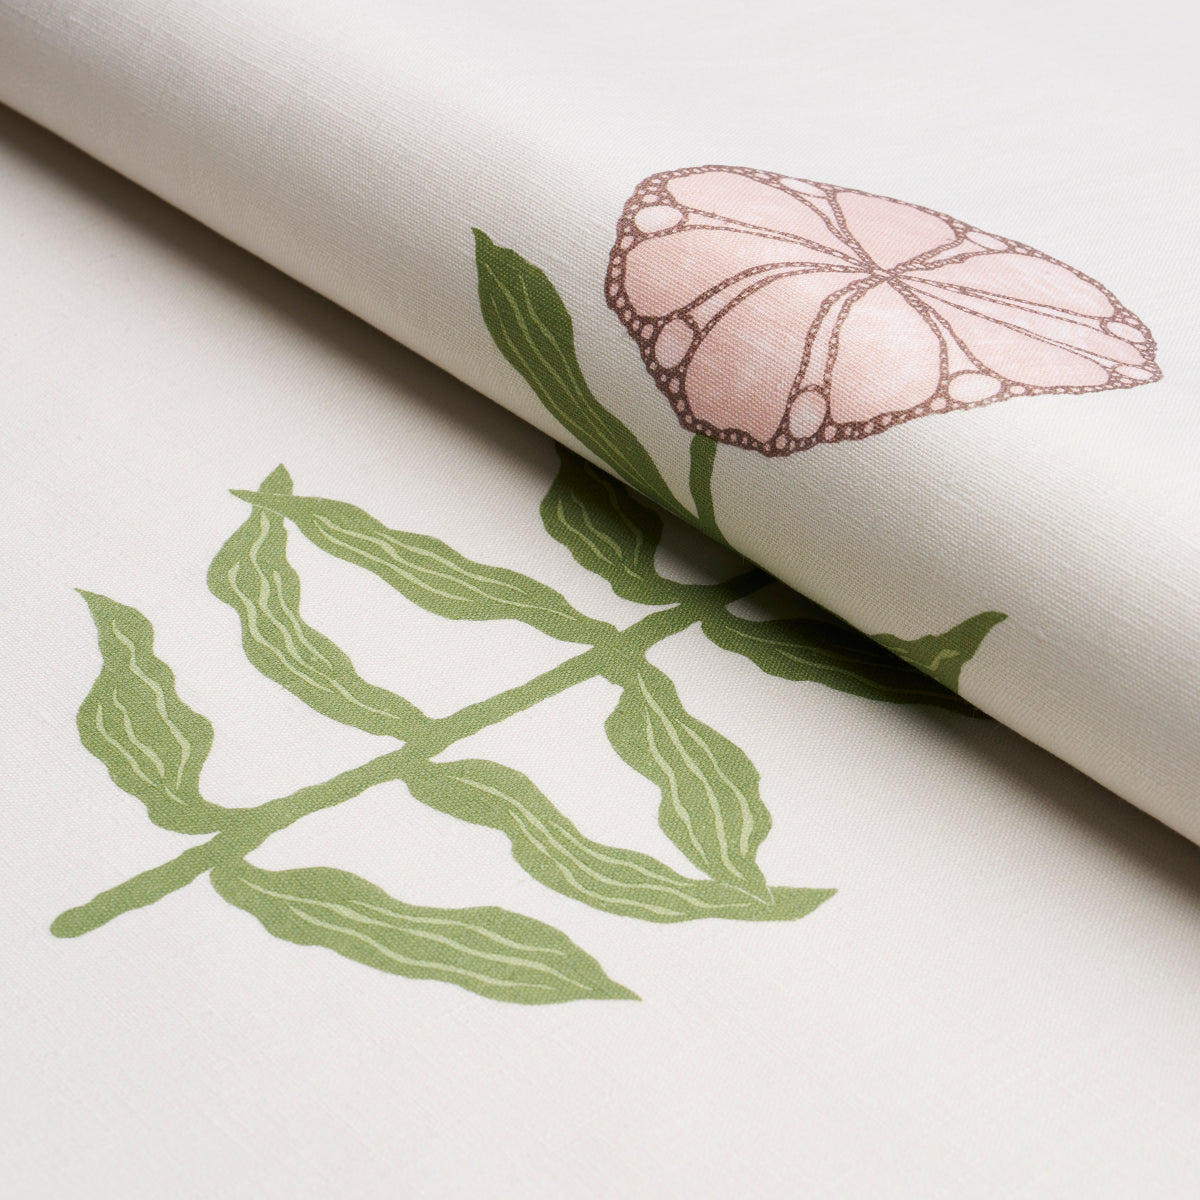 Purchase 181660 | Pretty Petals, Blush - Schumacher Fabric